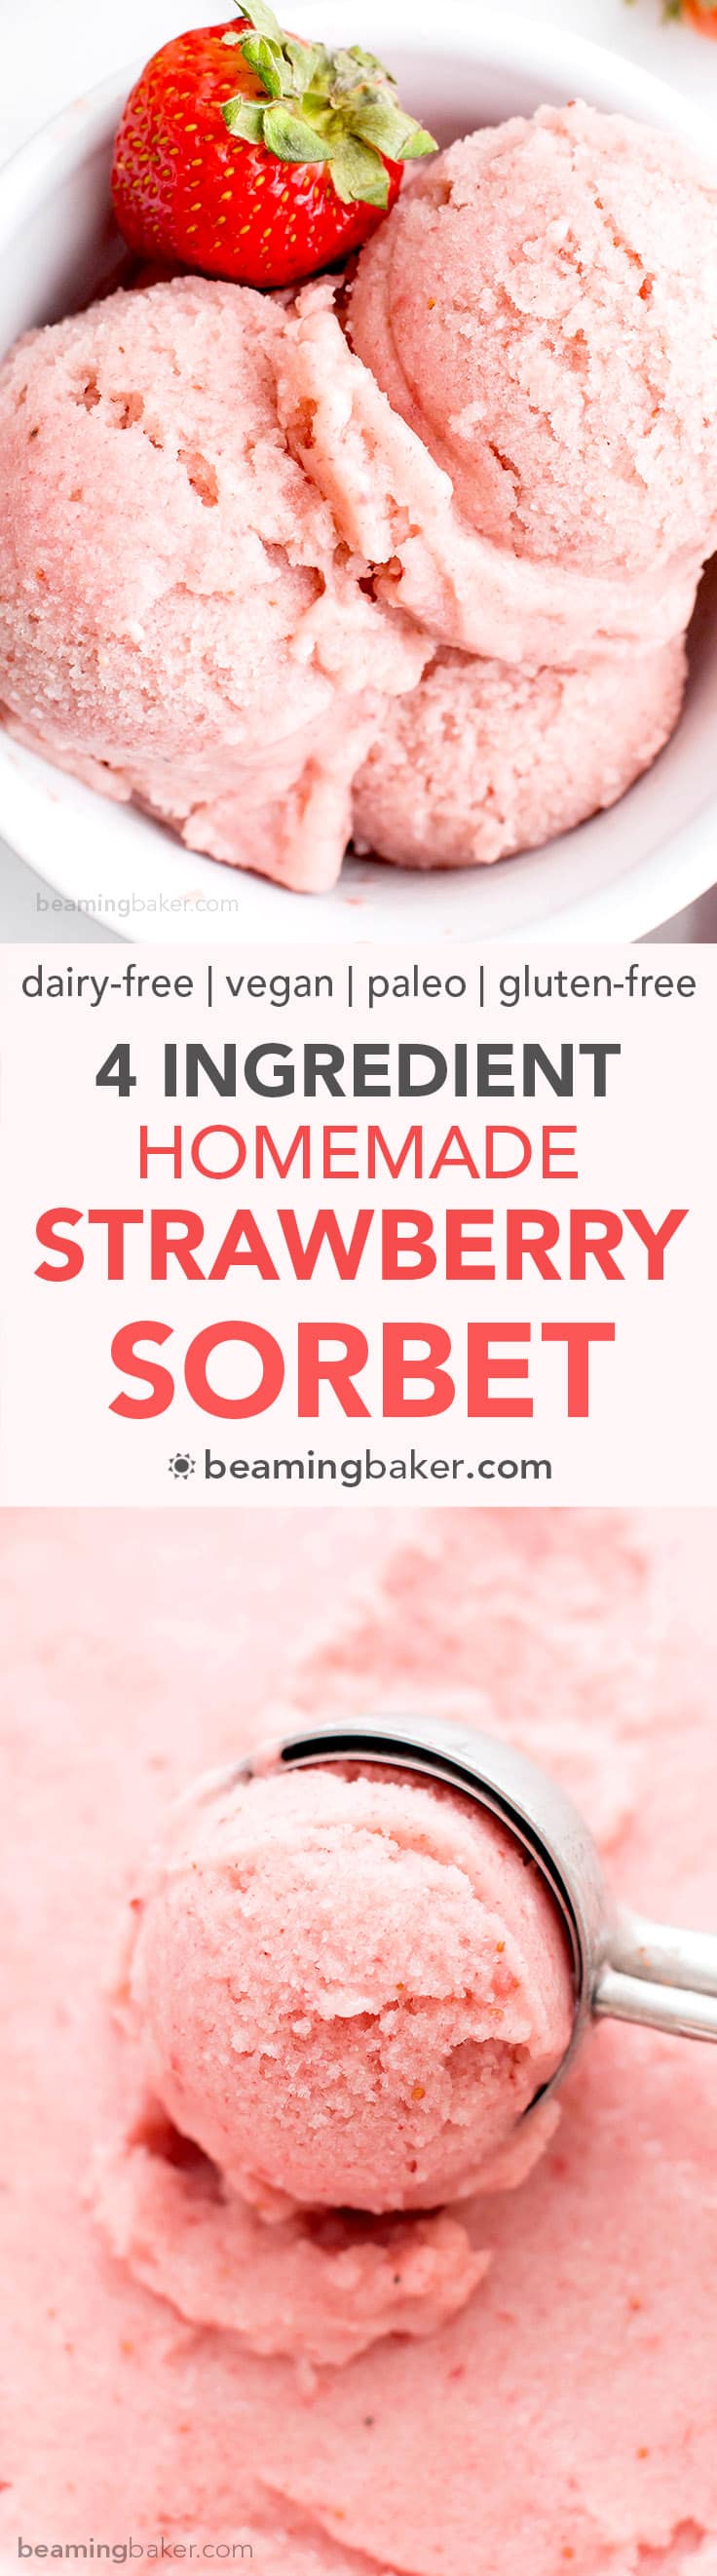 4 Ingredient Homemade Strawberry Sorbet (V+GF): an easy recipe for deliciously creamy and refreshing strawberry sorbet. #Vegan #DairyFree #Paleo #GlutenFree | BeamingBaker.com